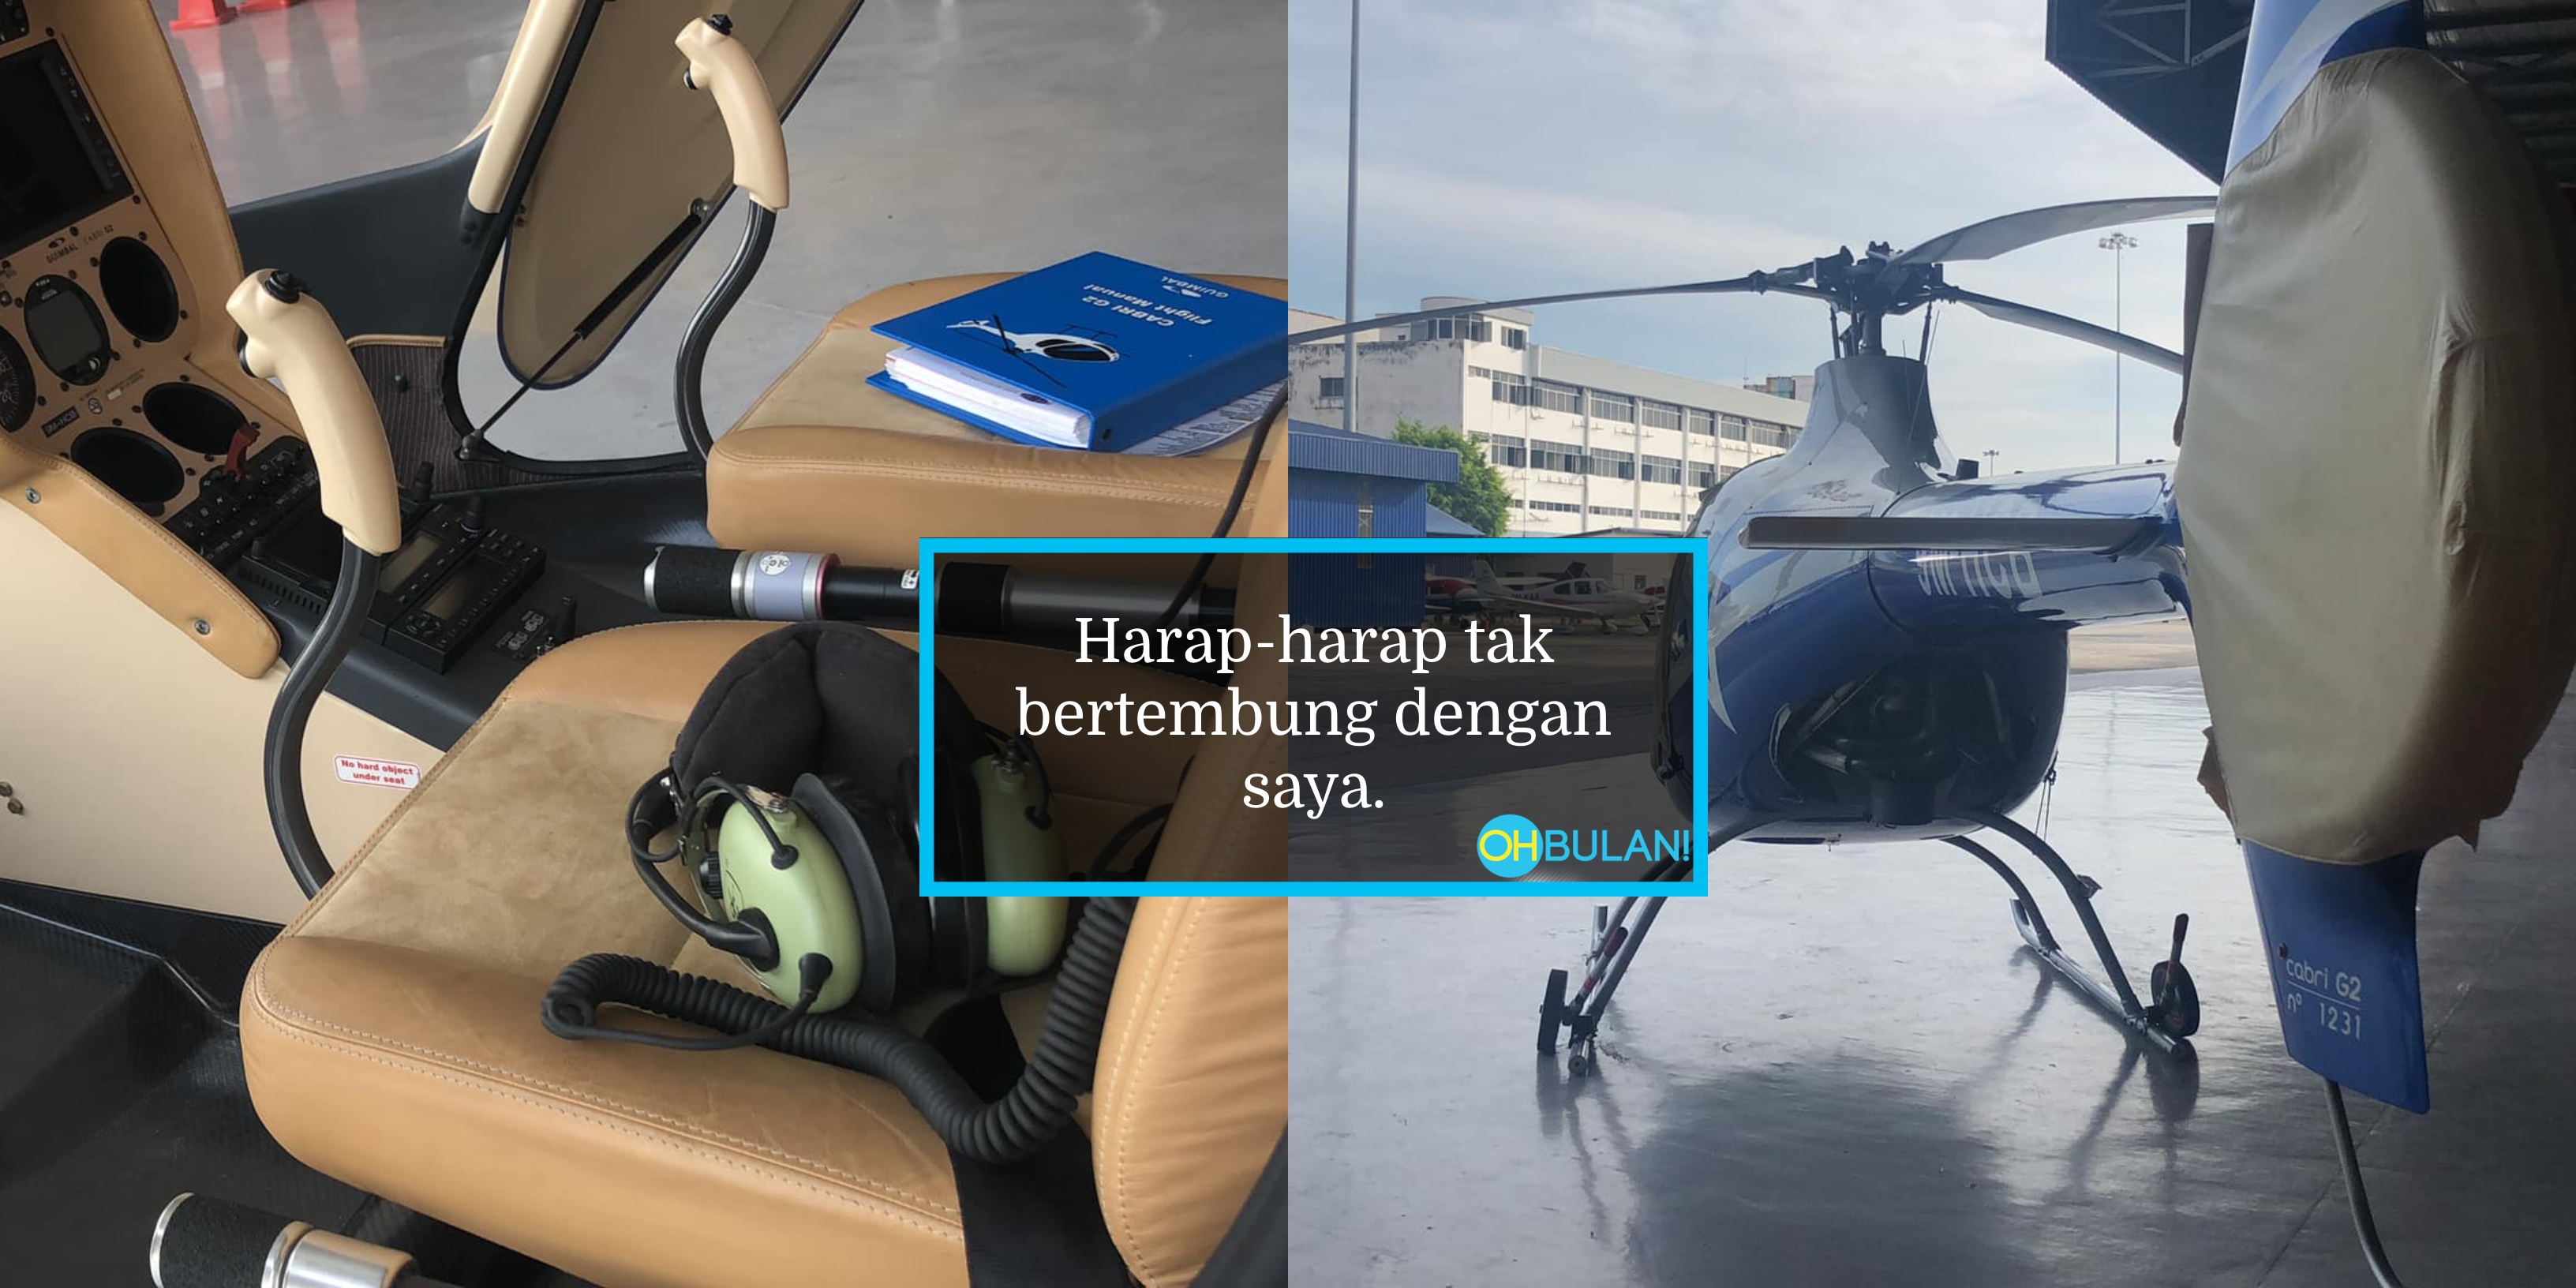 ‘It’s Not My Work, It’s My Passion’ – Muat Naik Foto Helikopter, Posting Mangsa Nahas Bikin Sebak